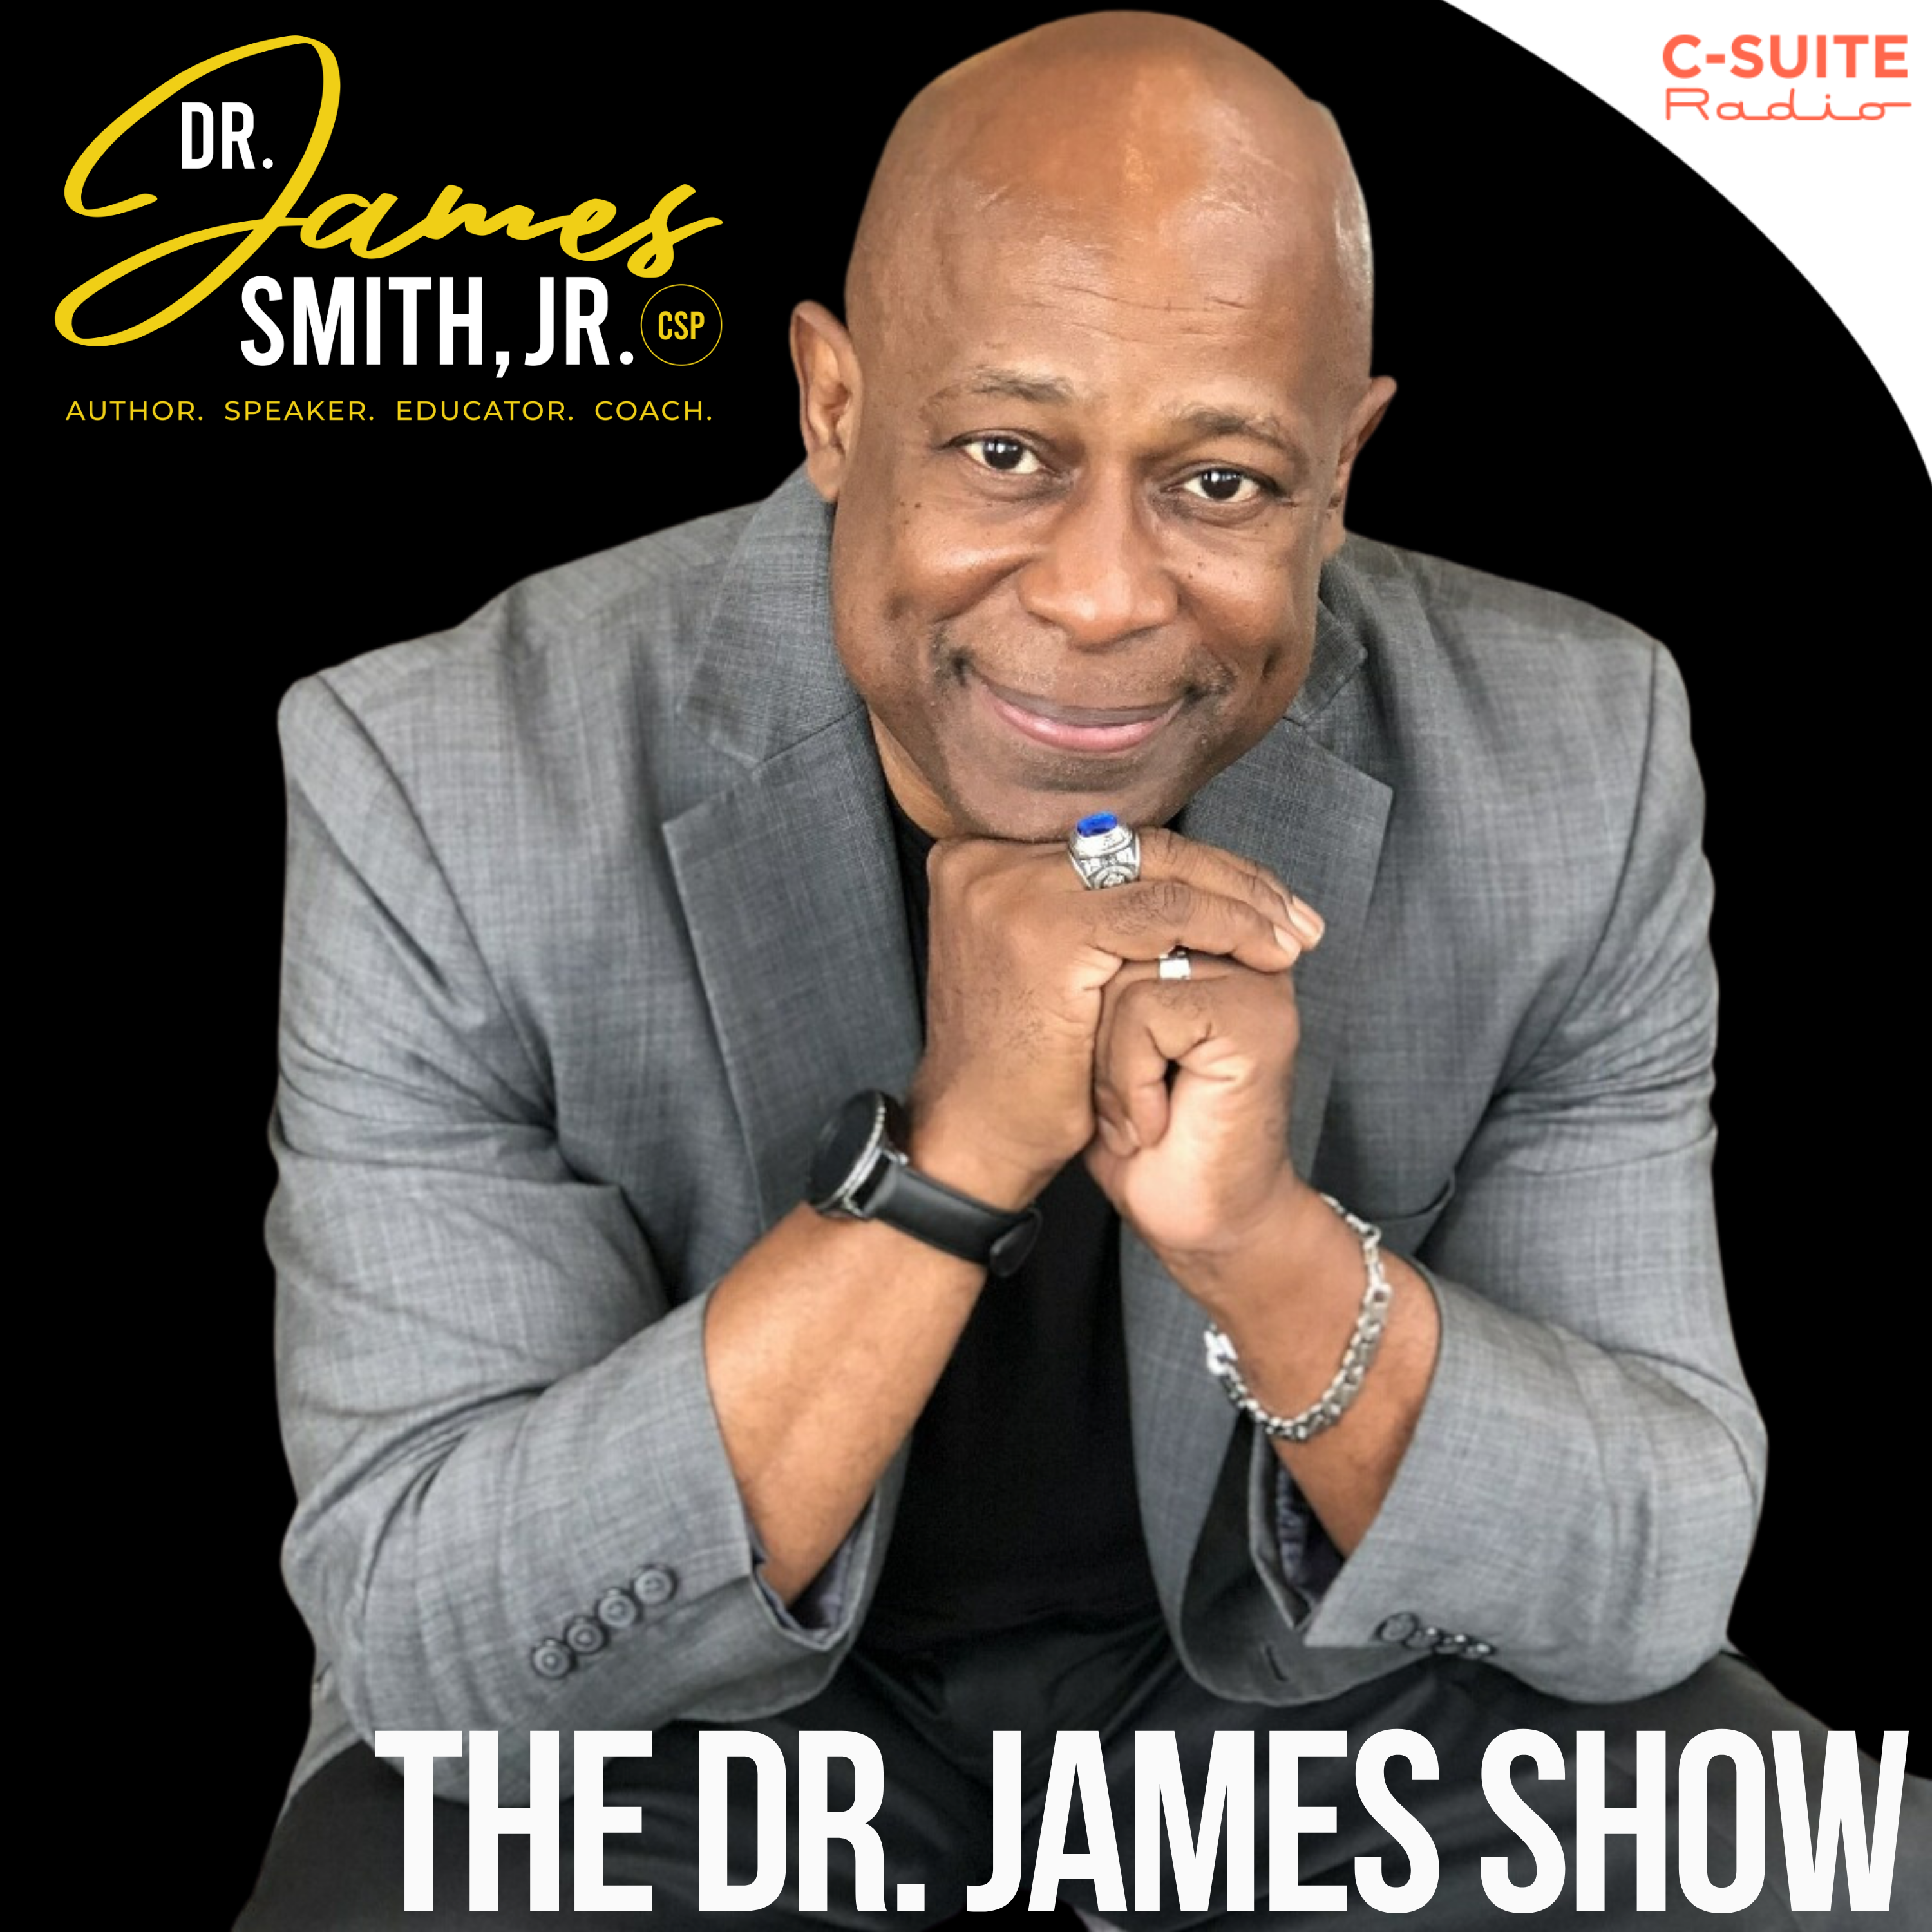 The Dr. James Show